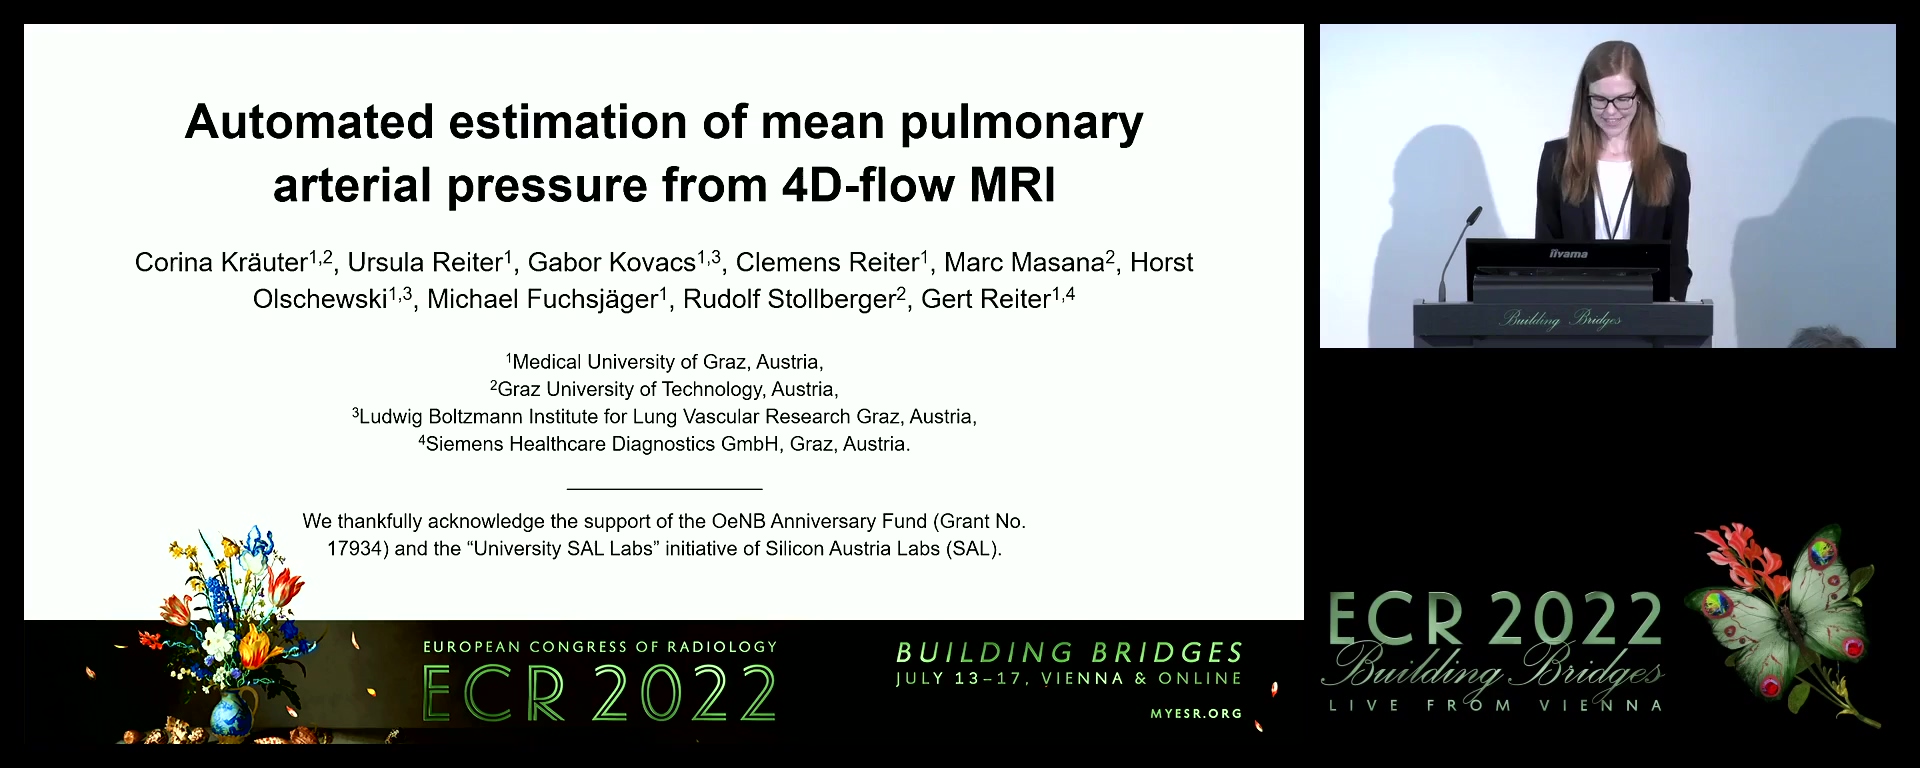 Automated estimation of mean pulmonary arterial pressure from 4D-flow MRI - Corina Kräuter, Graz / AT